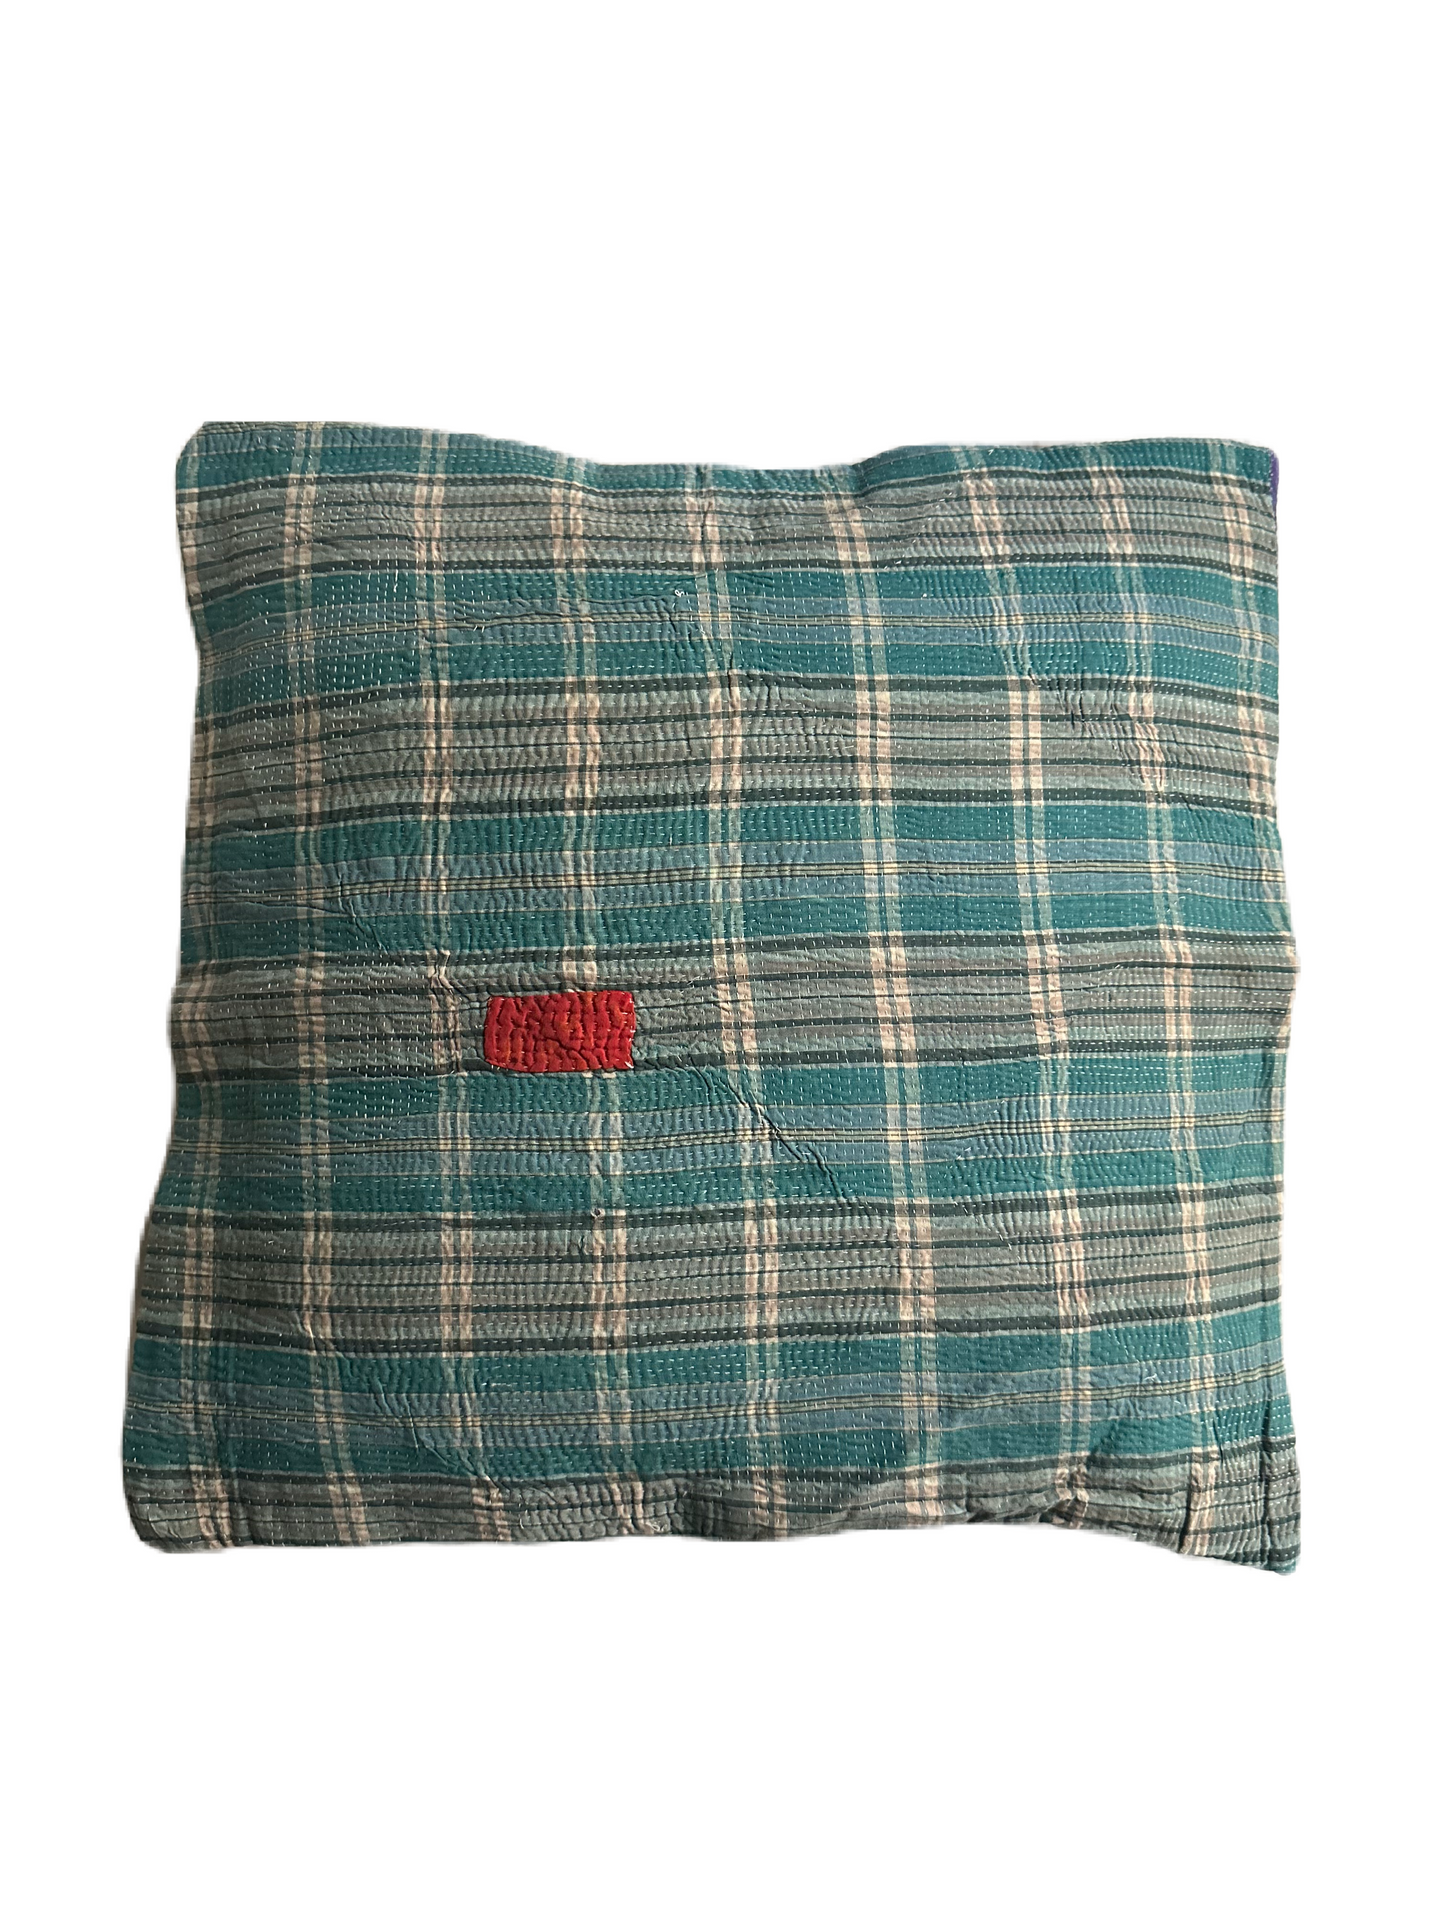 Kantha Pillow (50x50cm)